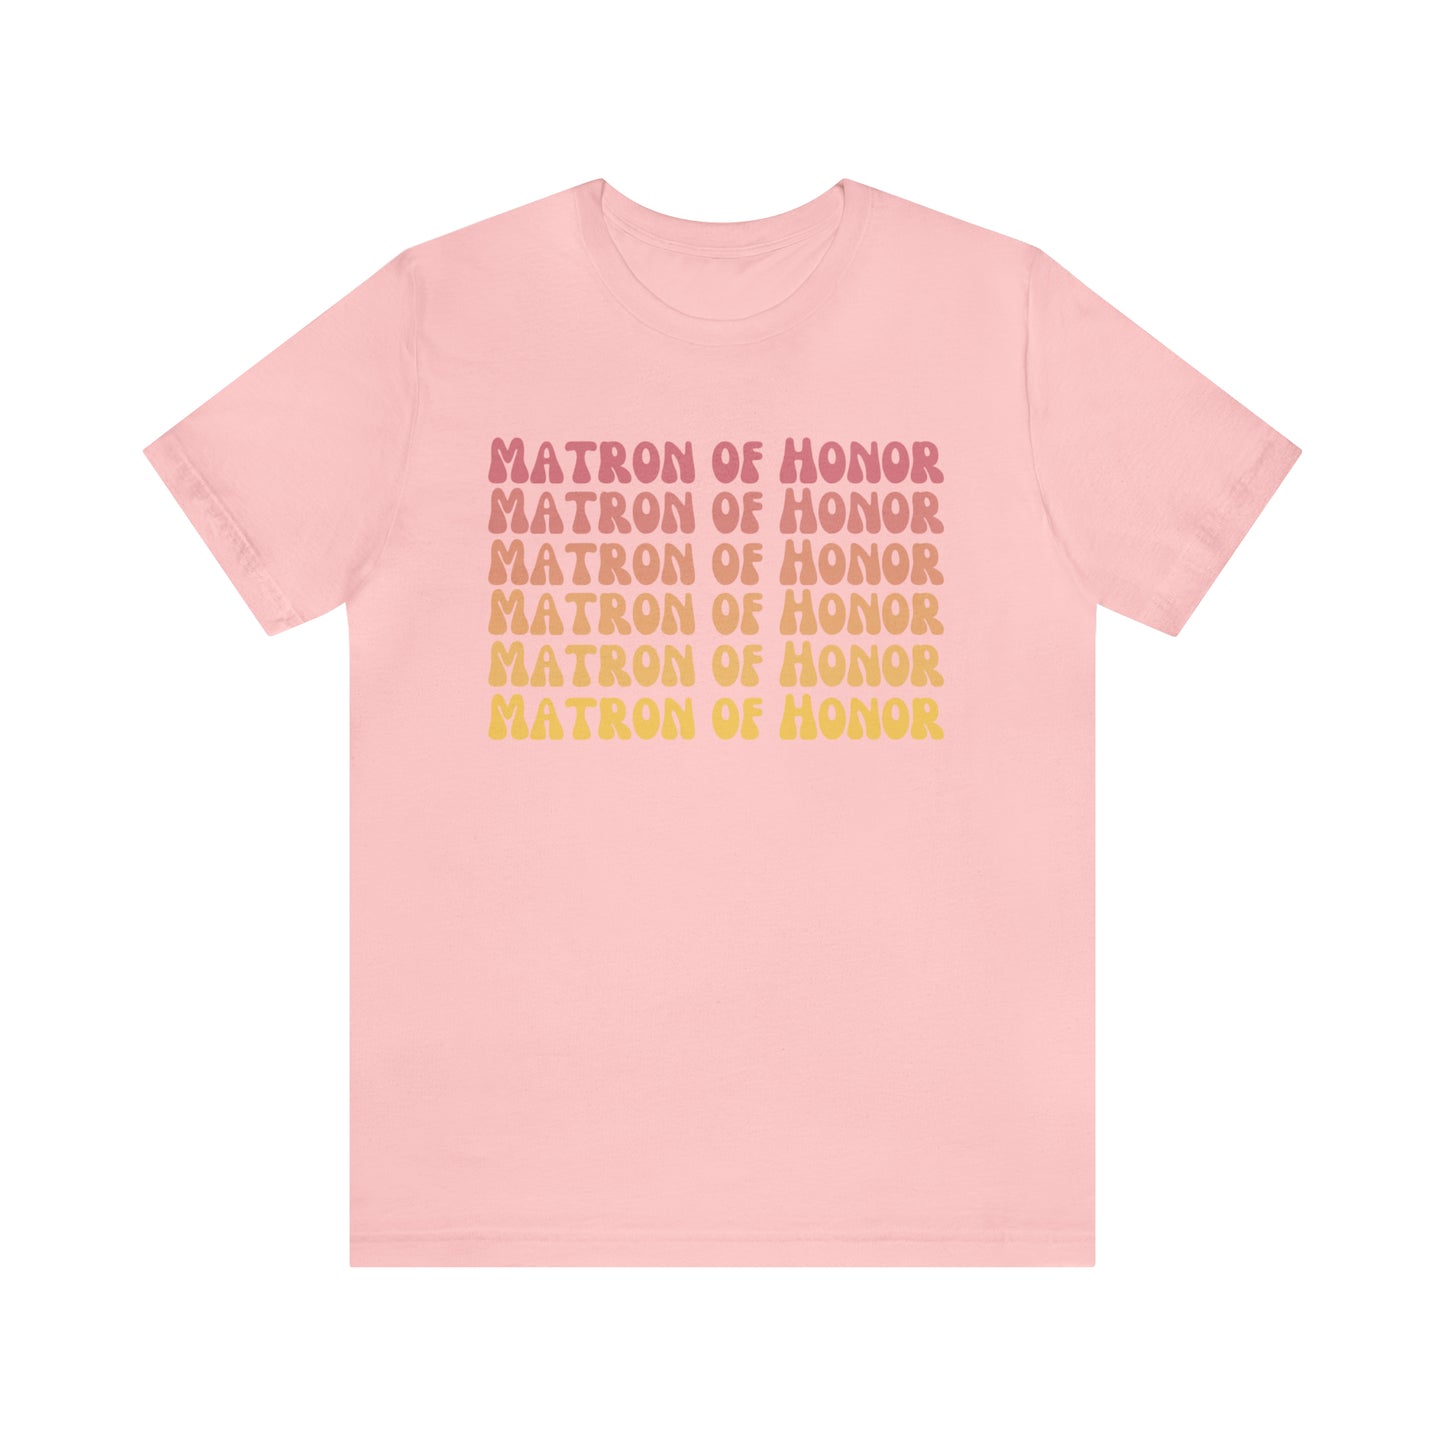 Retro Matron of Honor Shirt, Matron of Honor Shirt for Women, Cute Bachelorette Party Tee for Matron of Honor, T280